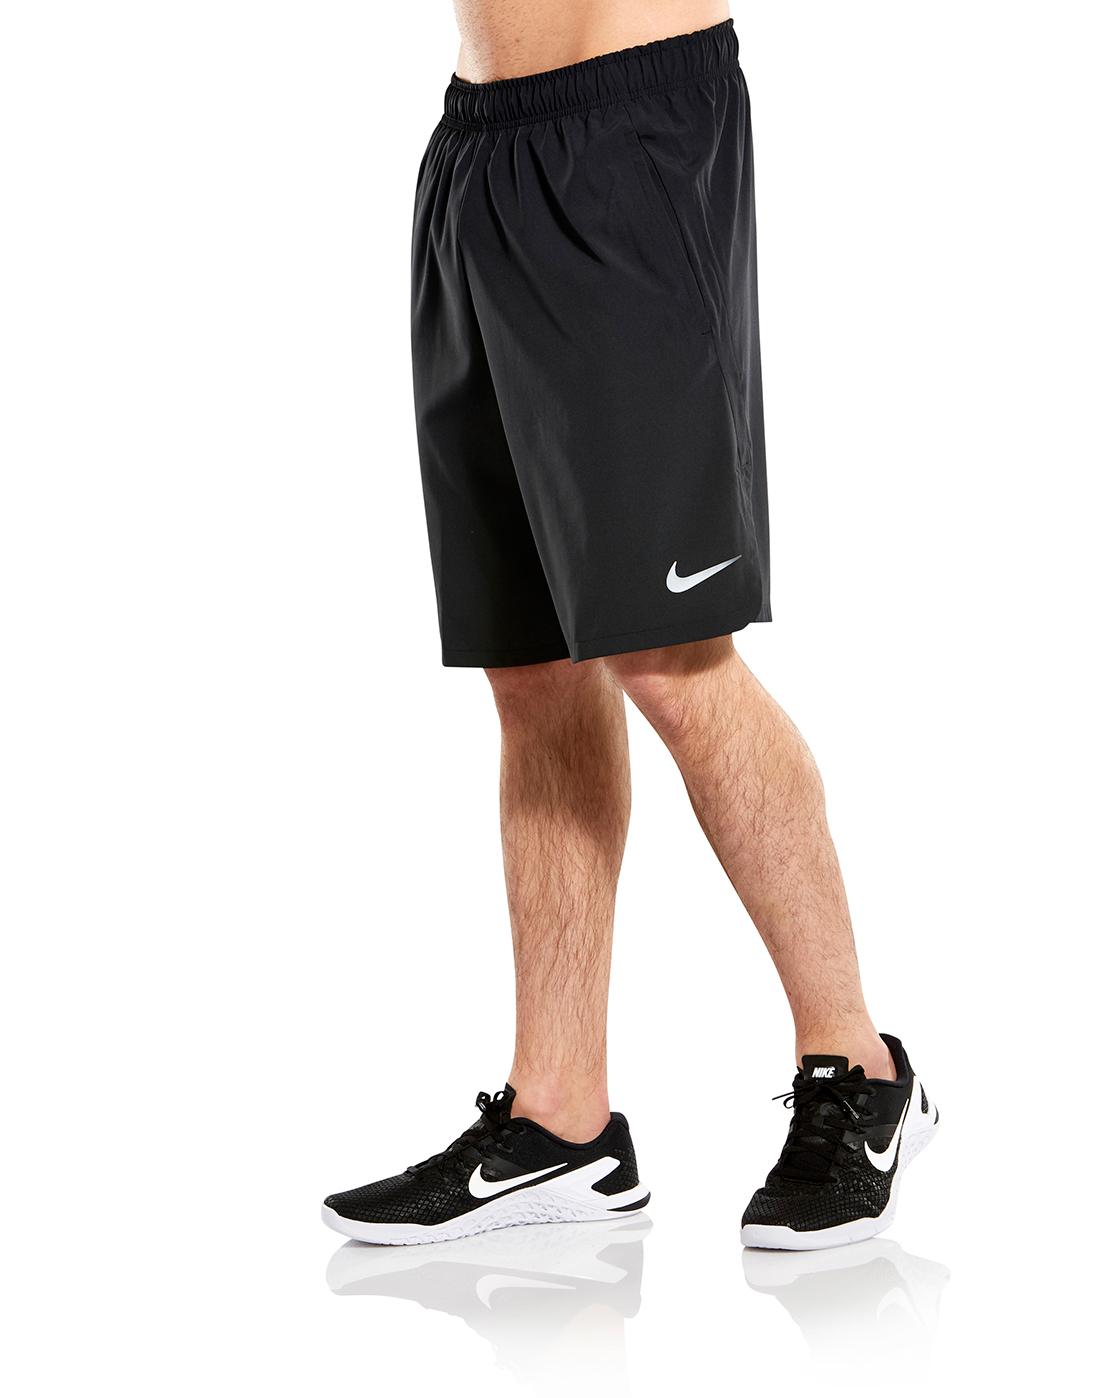 Men's Black Nike Flex Gym Shorts 2.0 